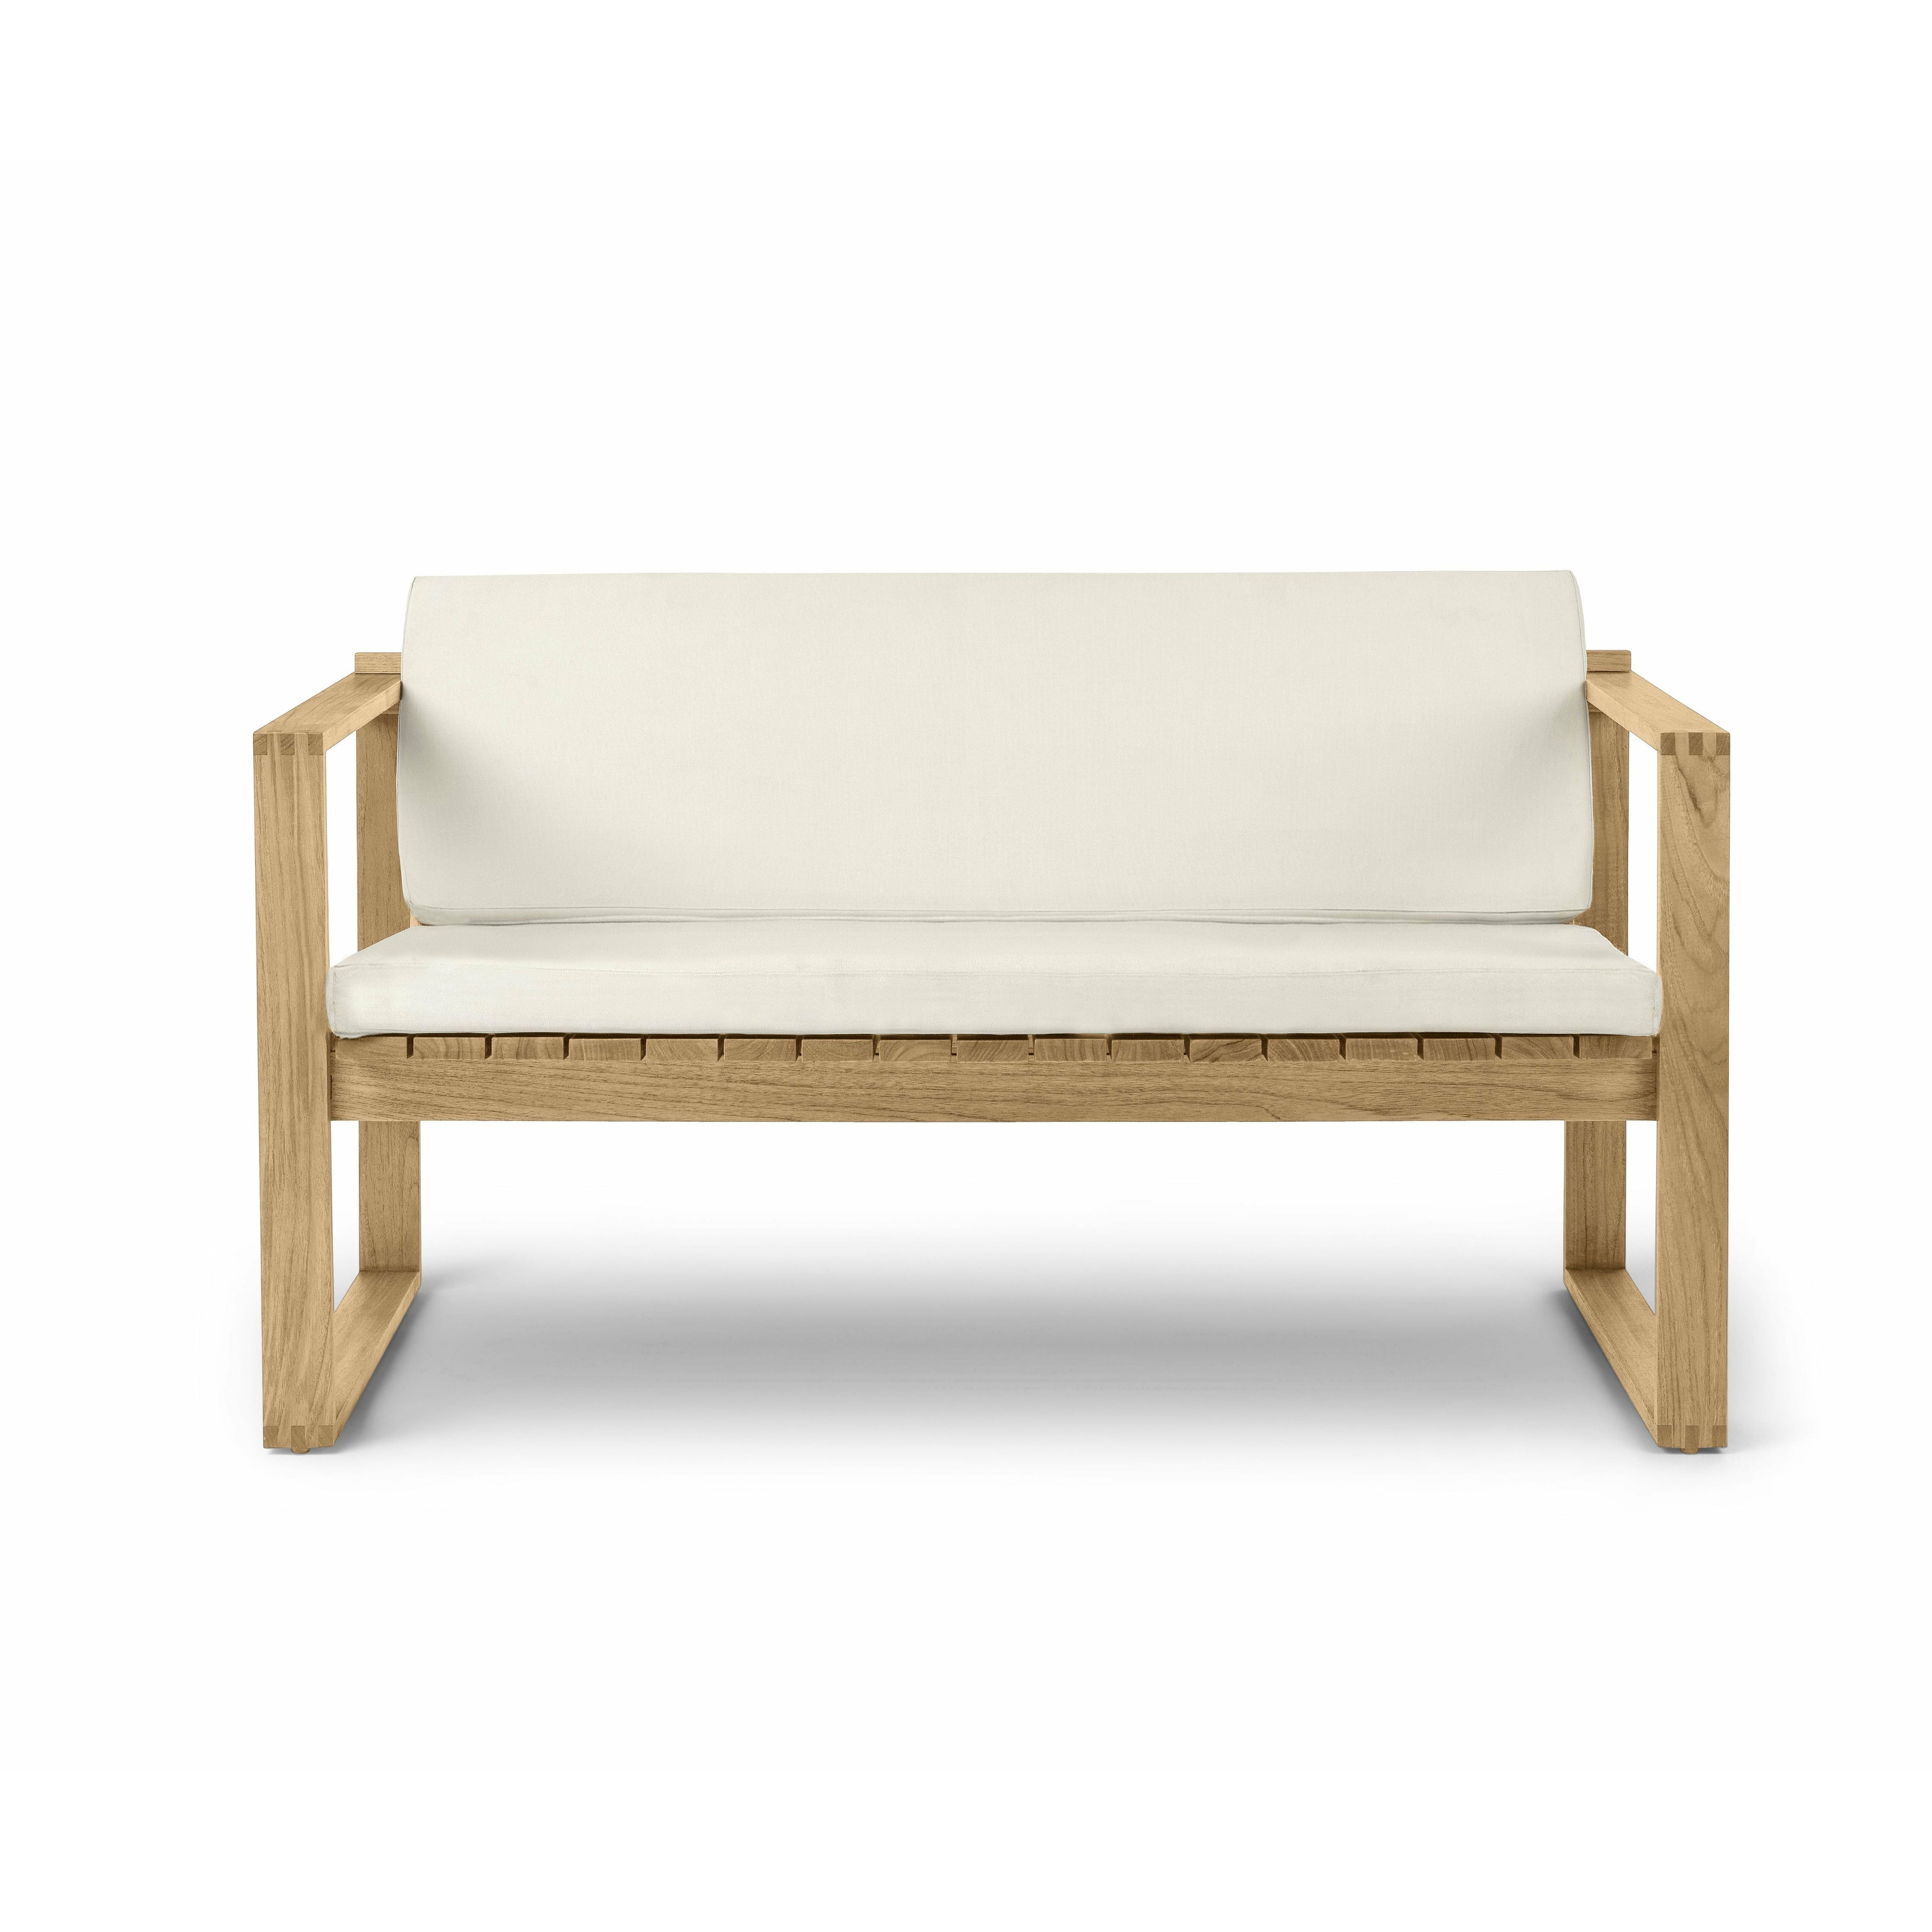 Carl Hansen BK12 Sofa sofa wewnętrzna/zewnętrzna, nietraktowany teak